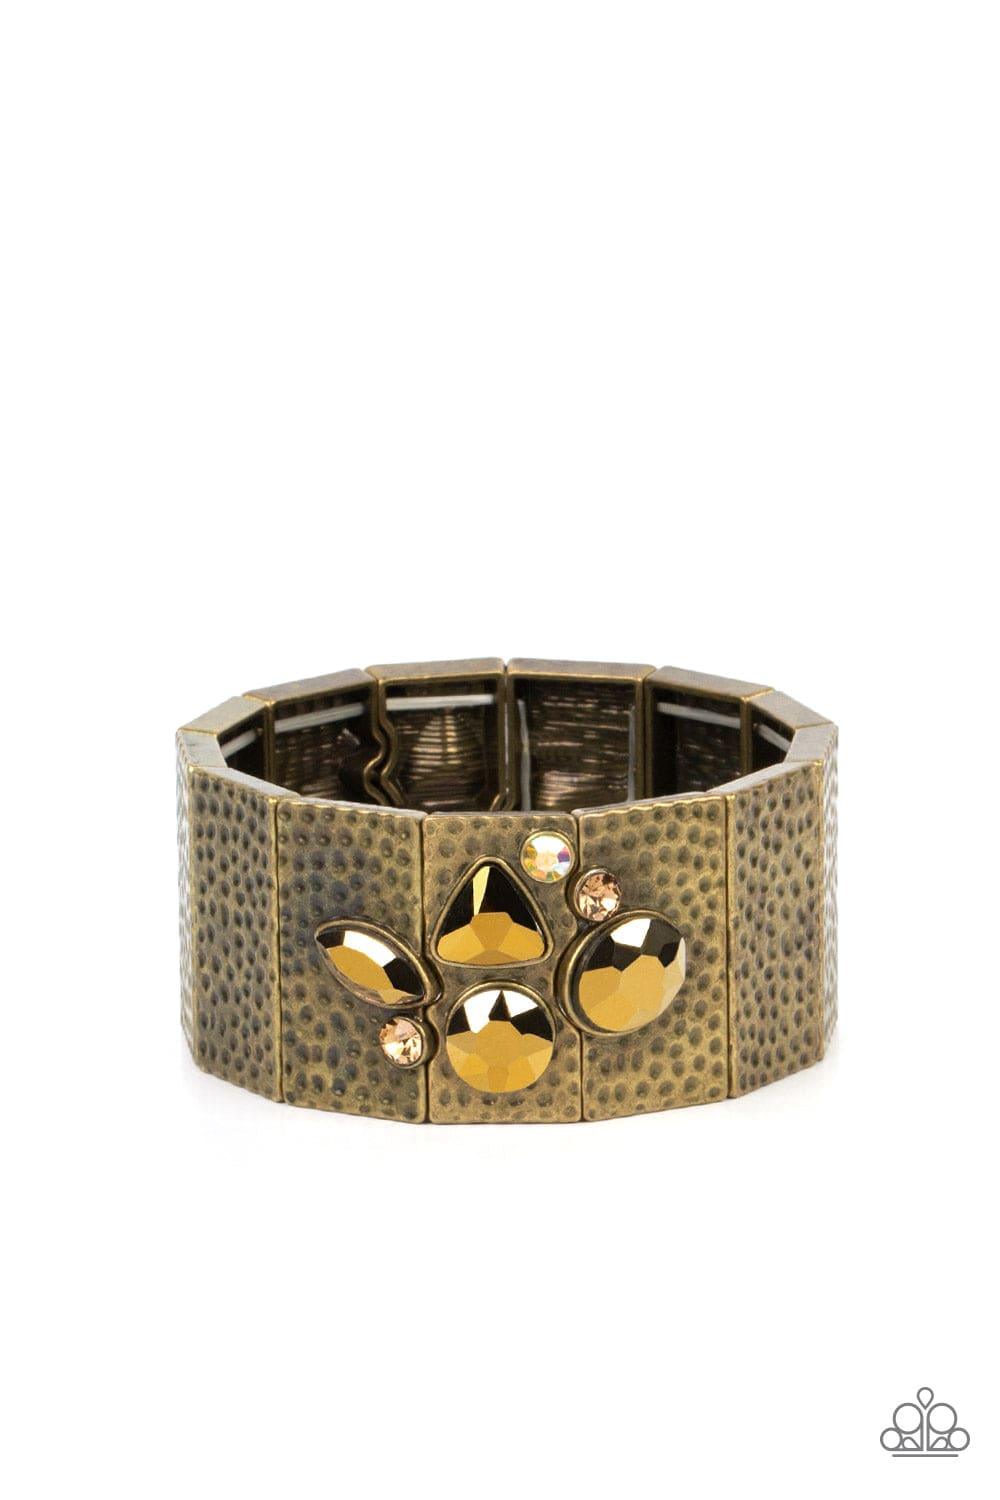 Paparazzi Accessories - Flickering Fortune - Brass Bracelet - Bling by JessieK